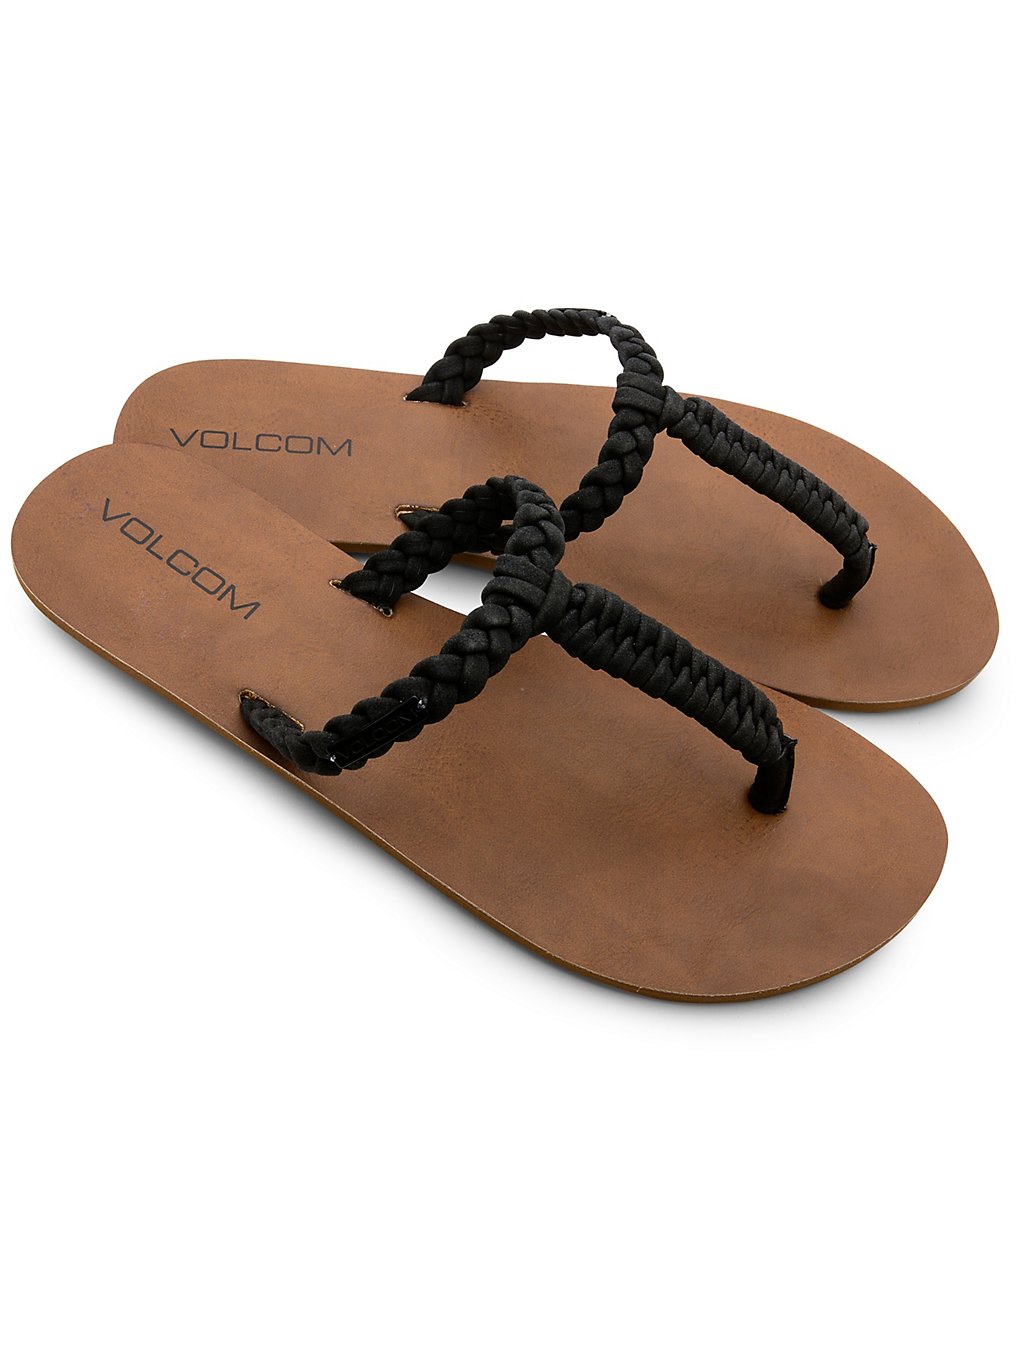 Volcom fishtail sandals musta, volcom